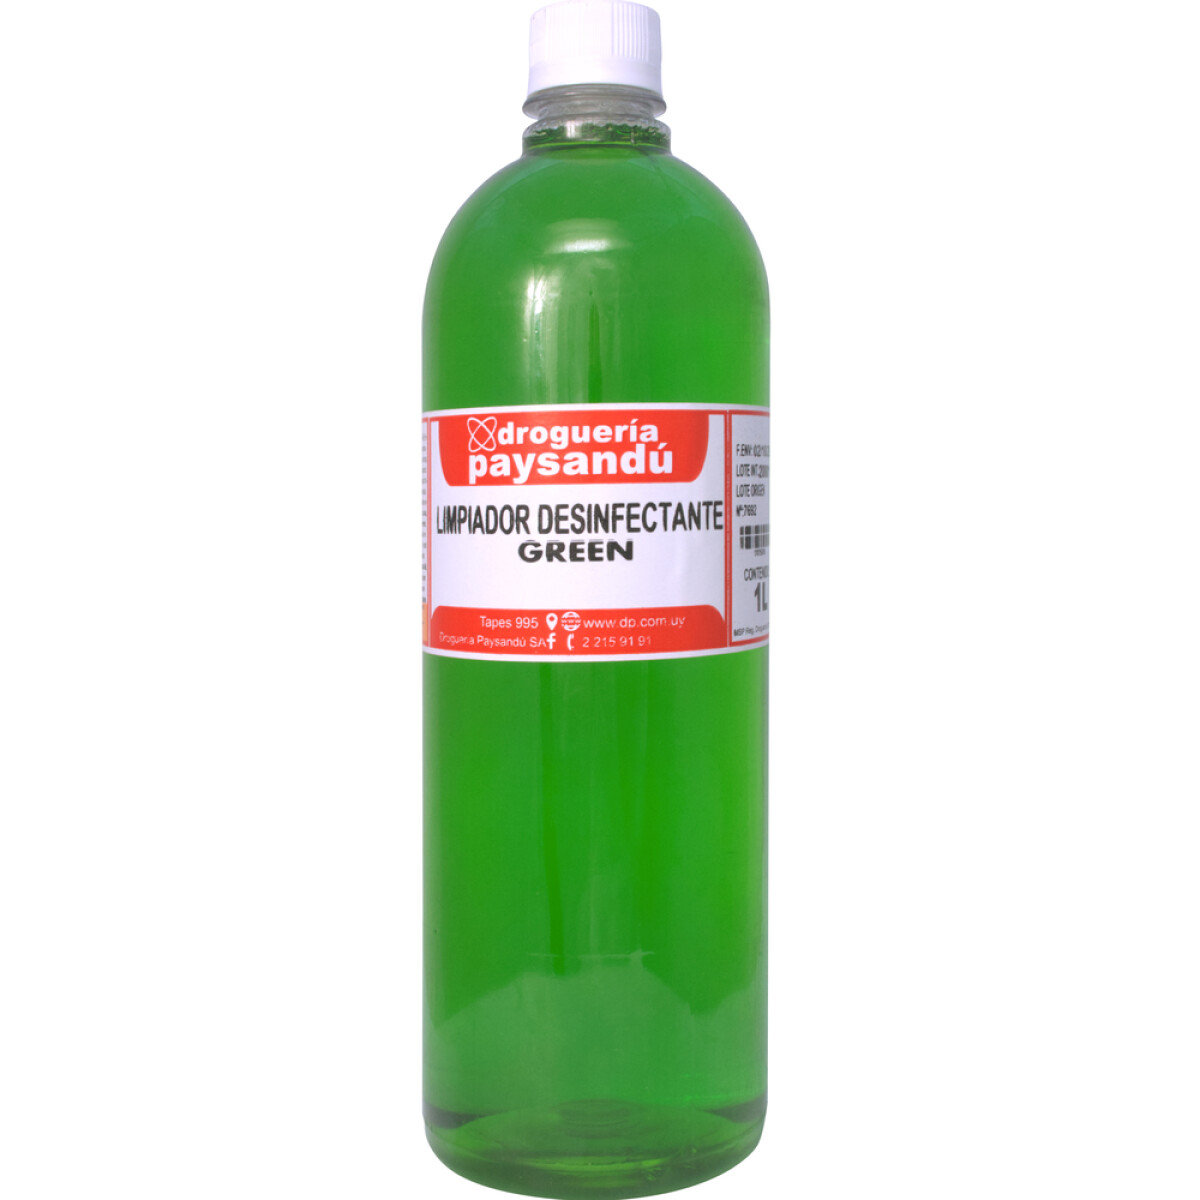 Limpiador Desinfectante Green 1 L - Rinde 1:50 